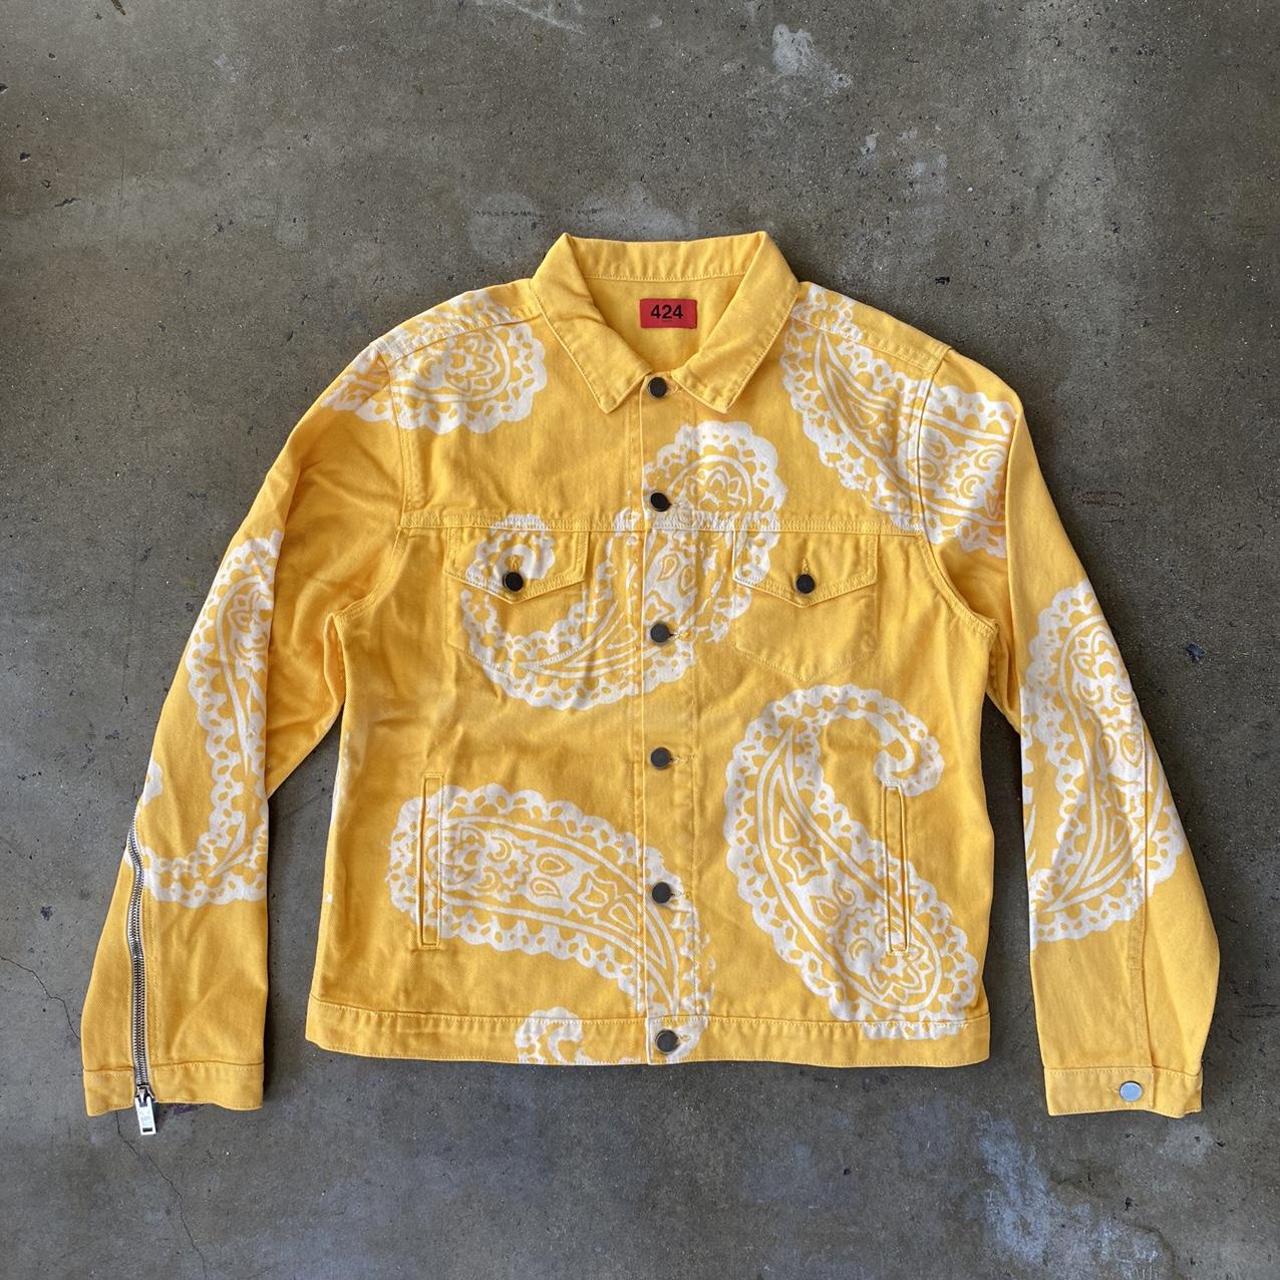 Product Image 1 - Yellow denim jacket with white